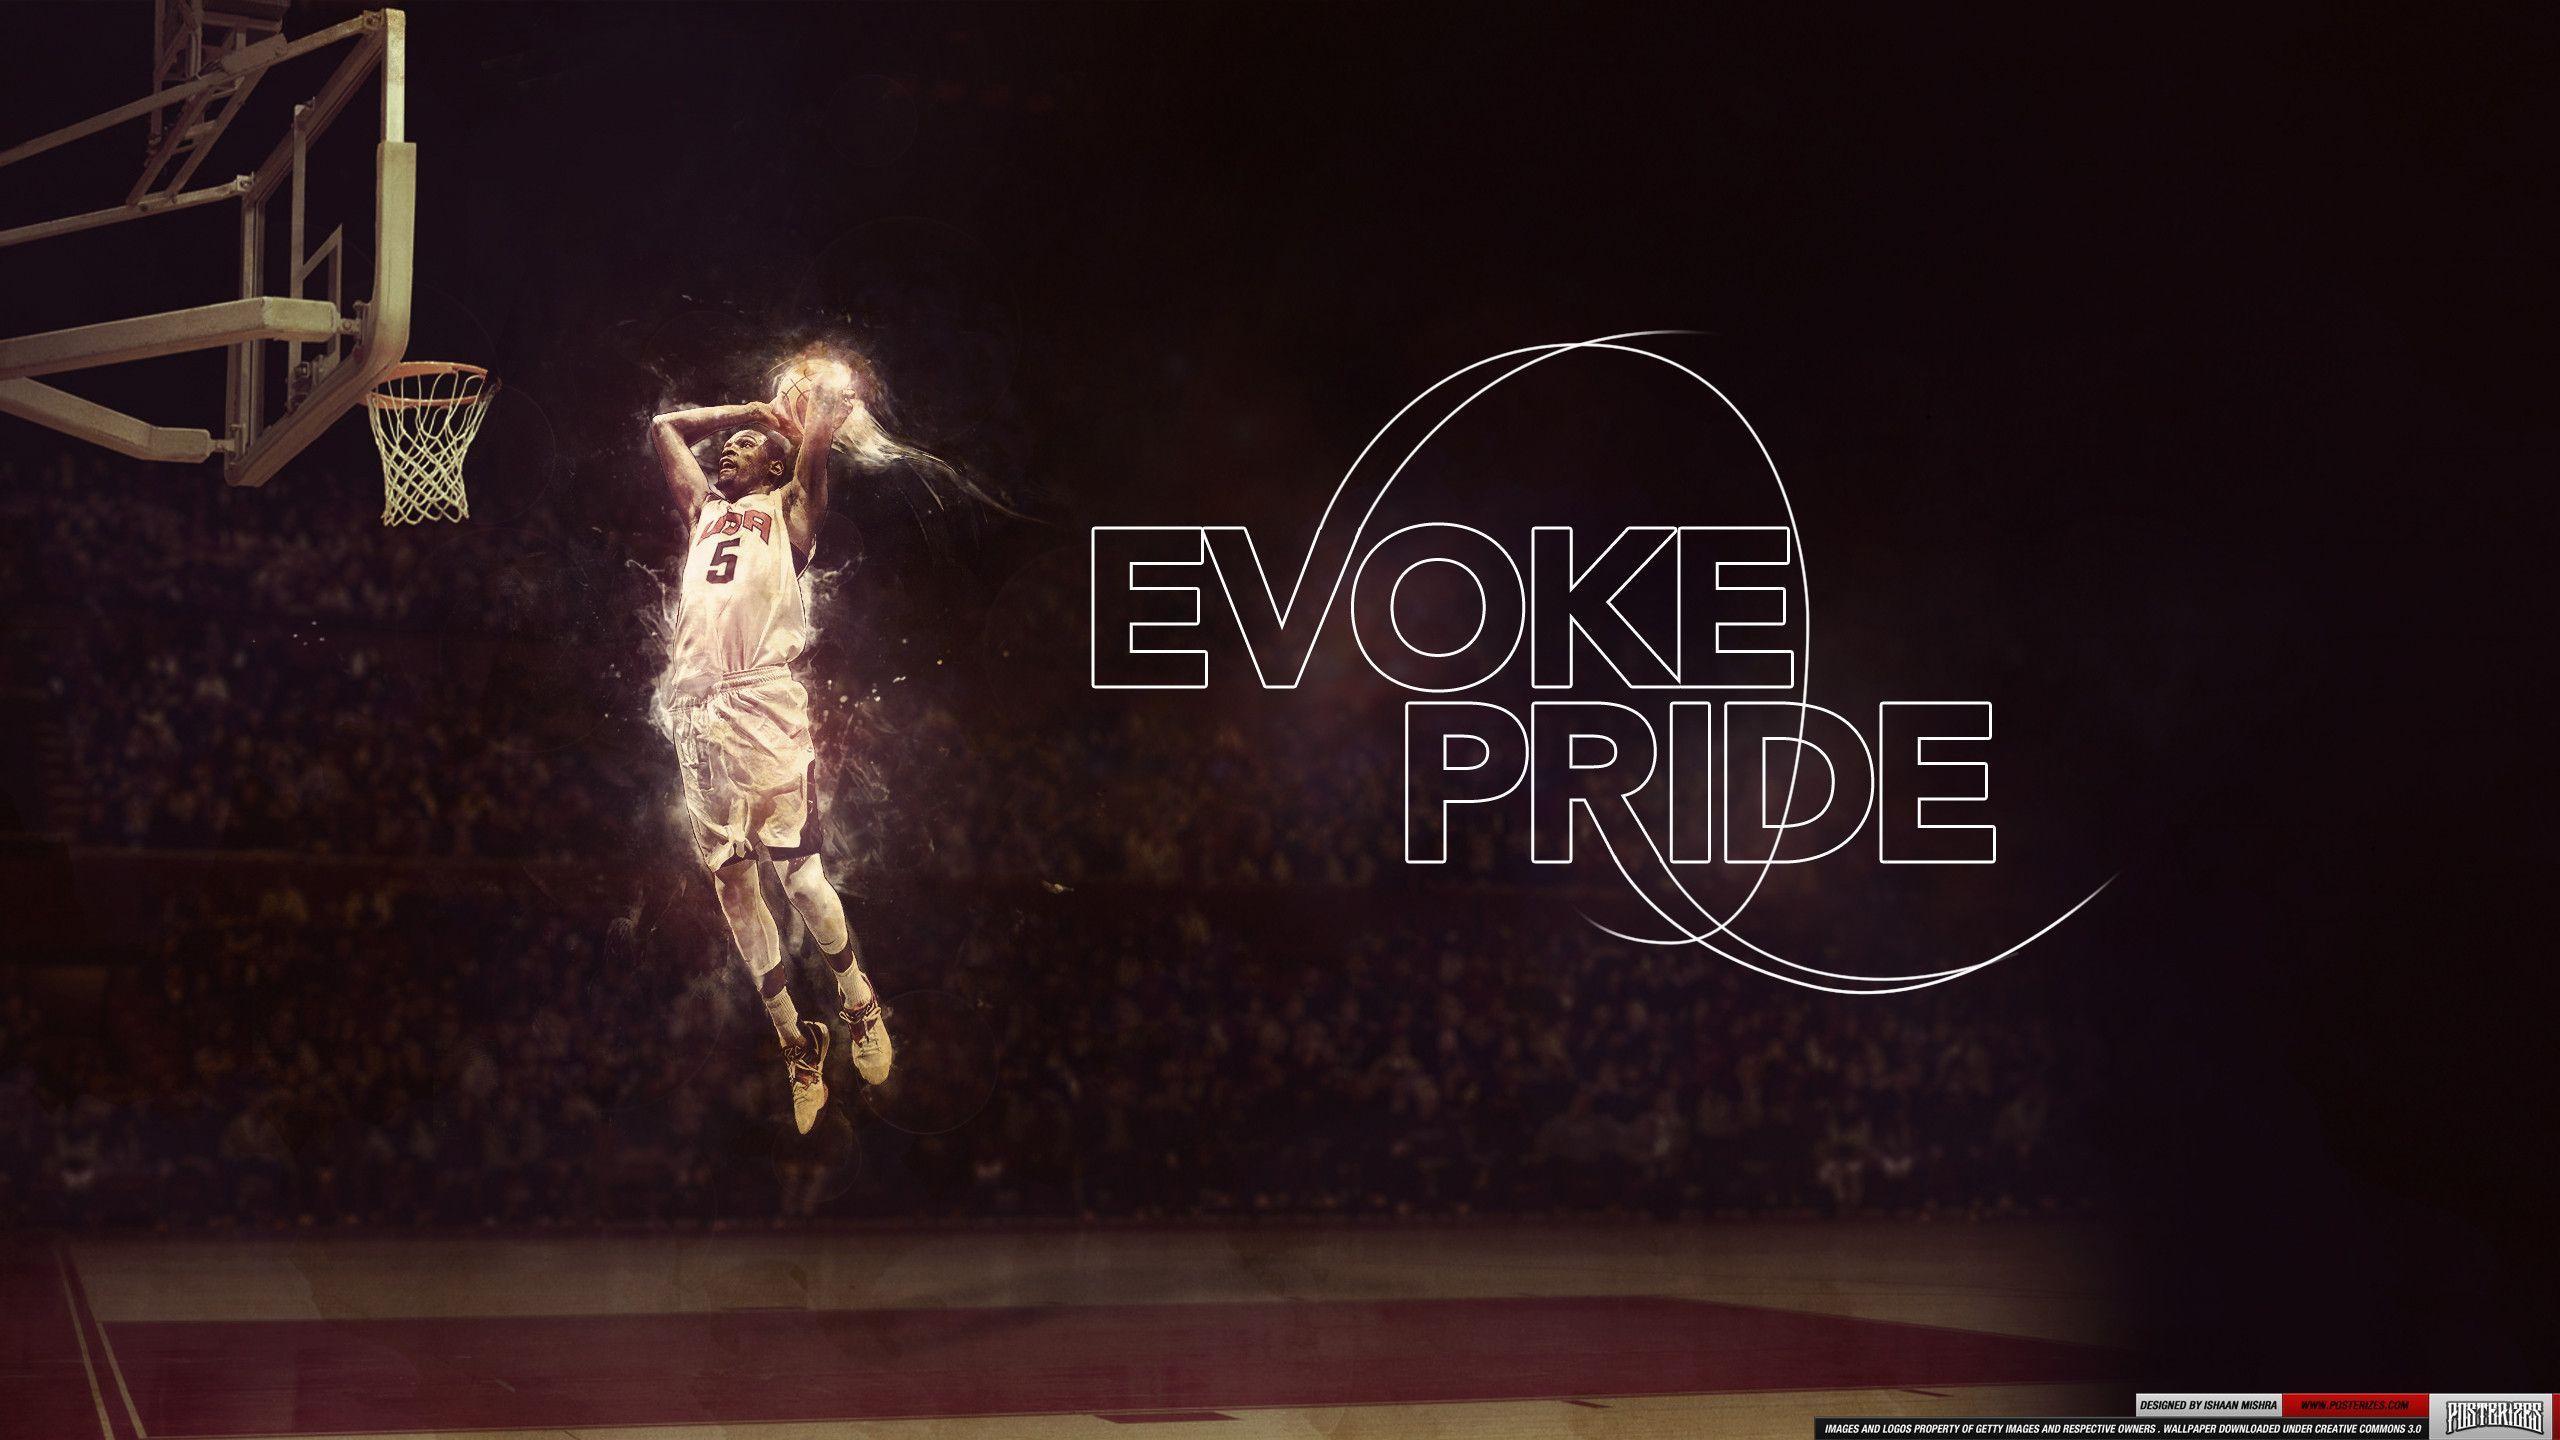 Kevin Durant “Evoke Pride” Wallpaper. Posterizes. NBA Wallpaper